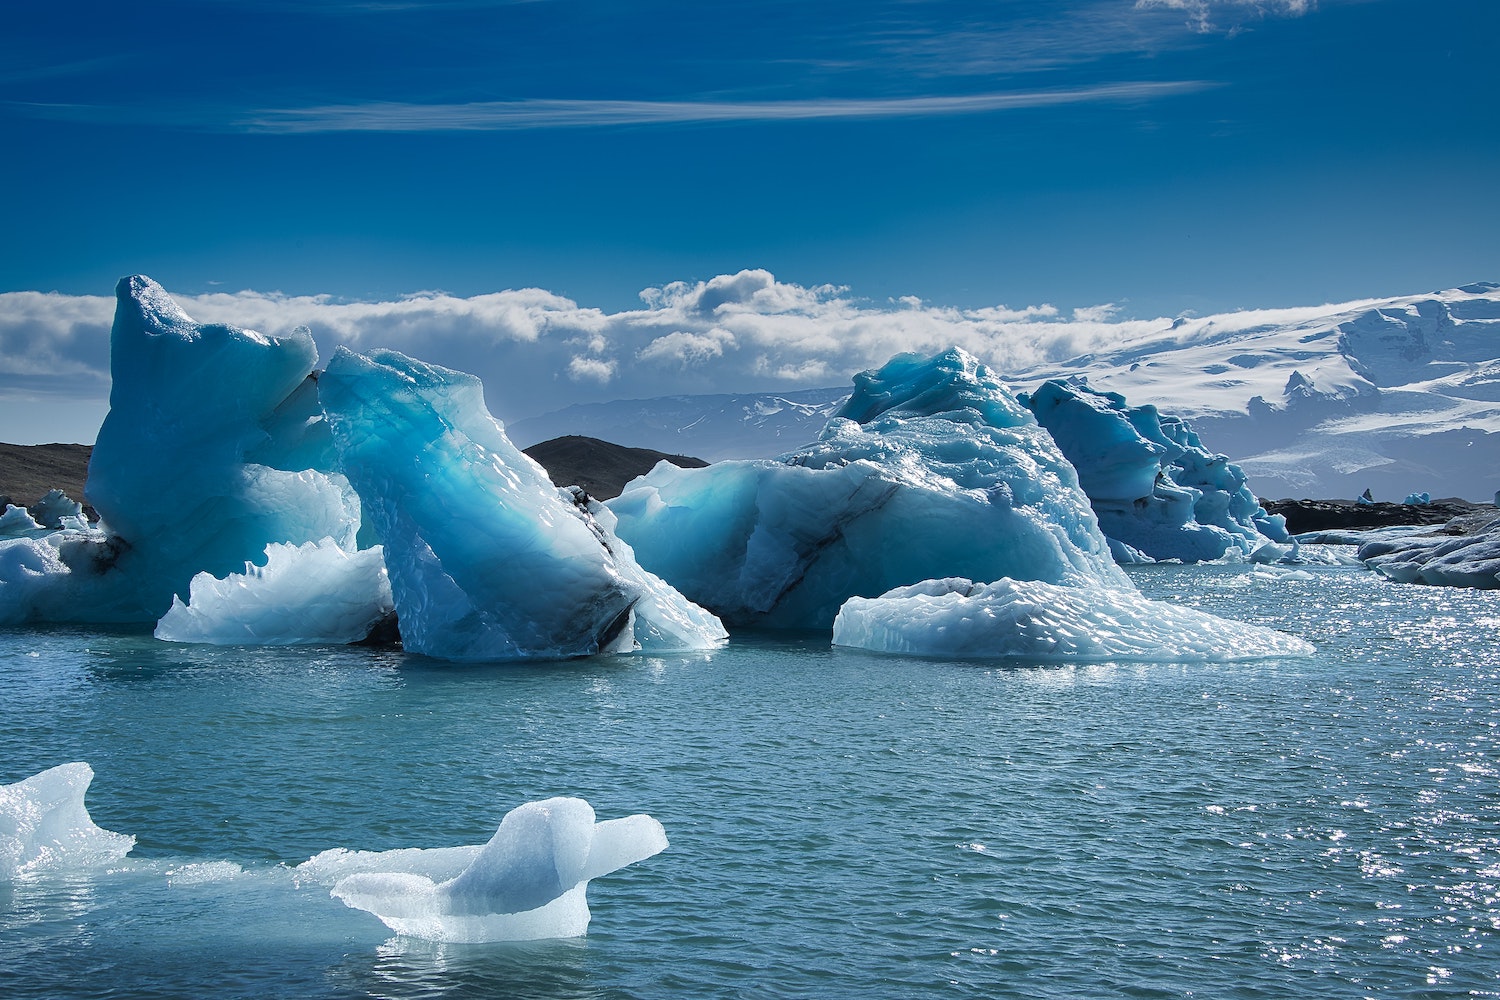 climate change leading to melting ice